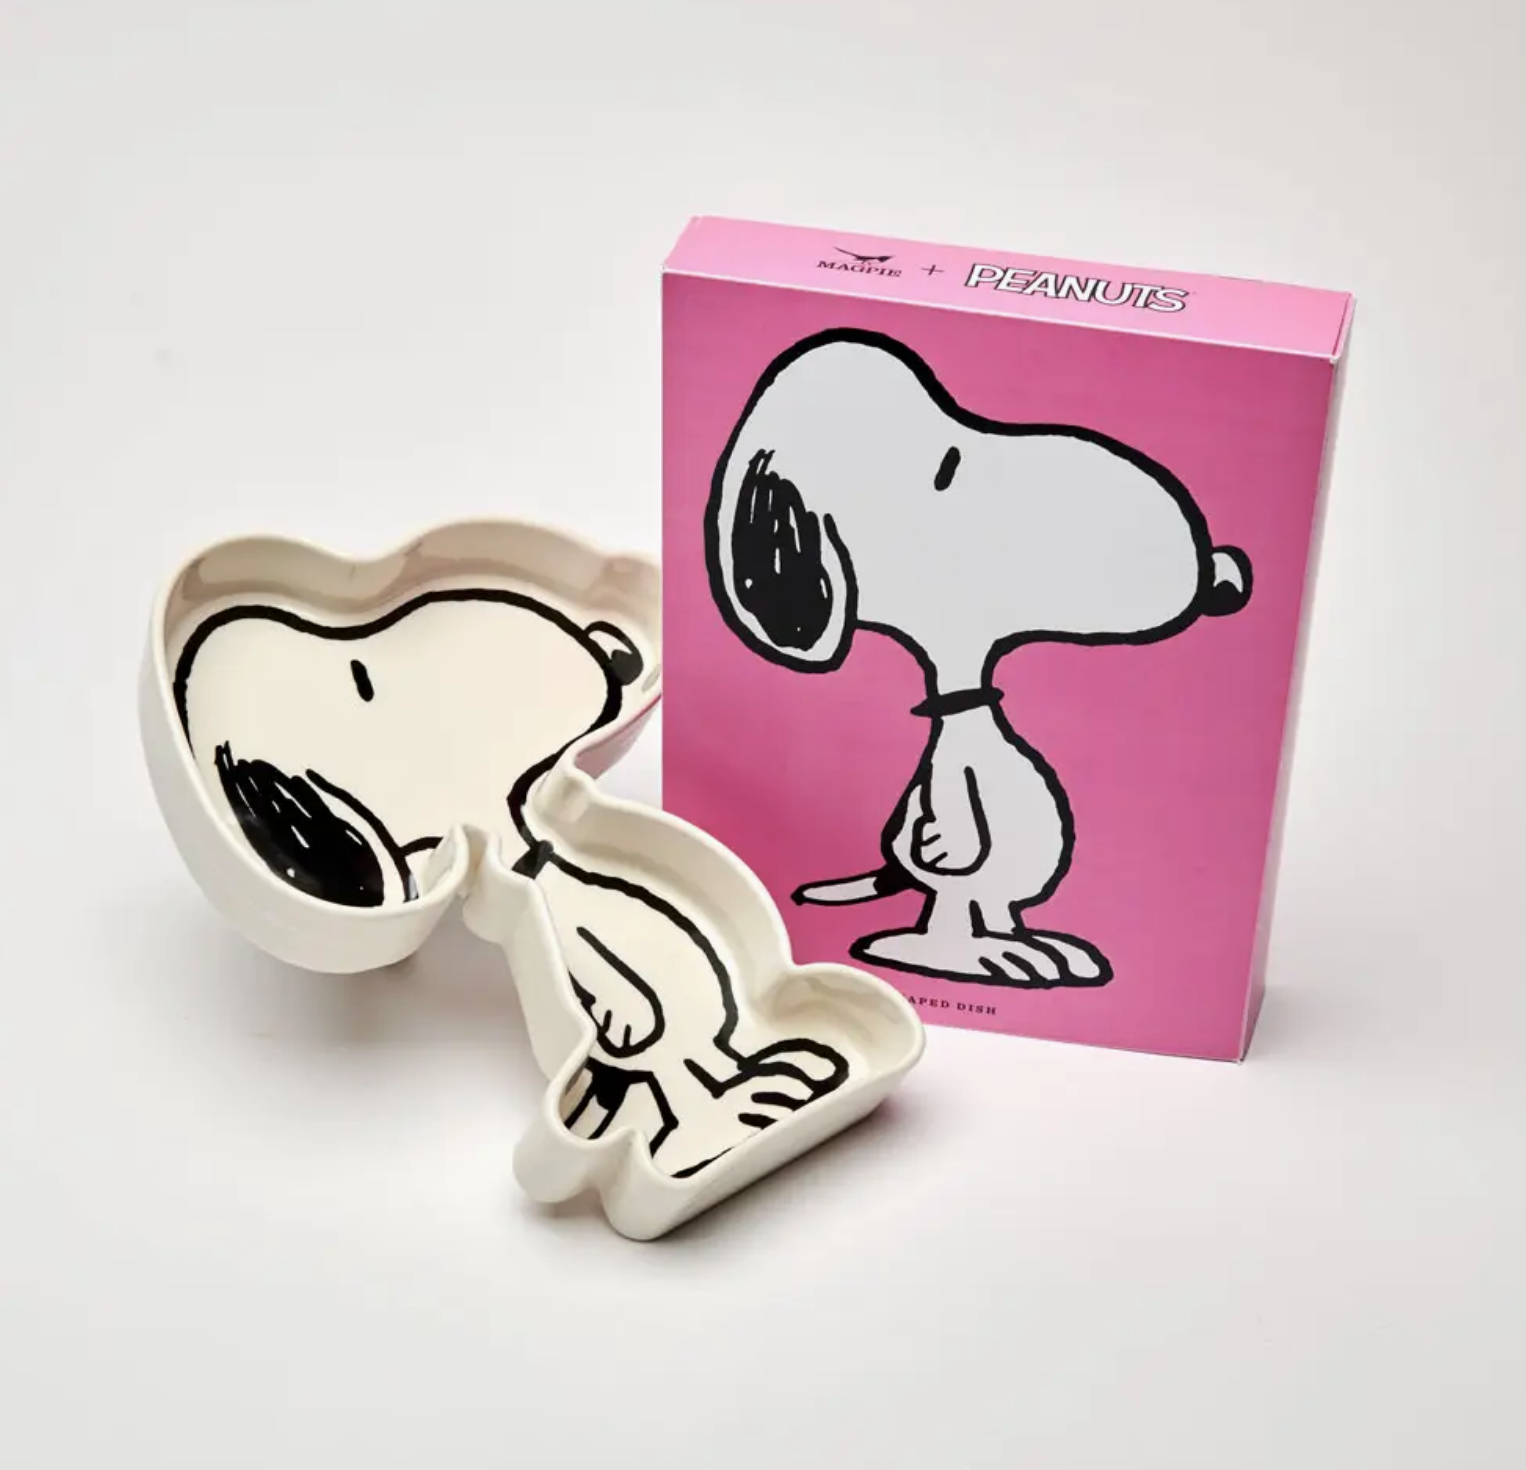 Peanuts Snoopy Trinket Tray x Magpie